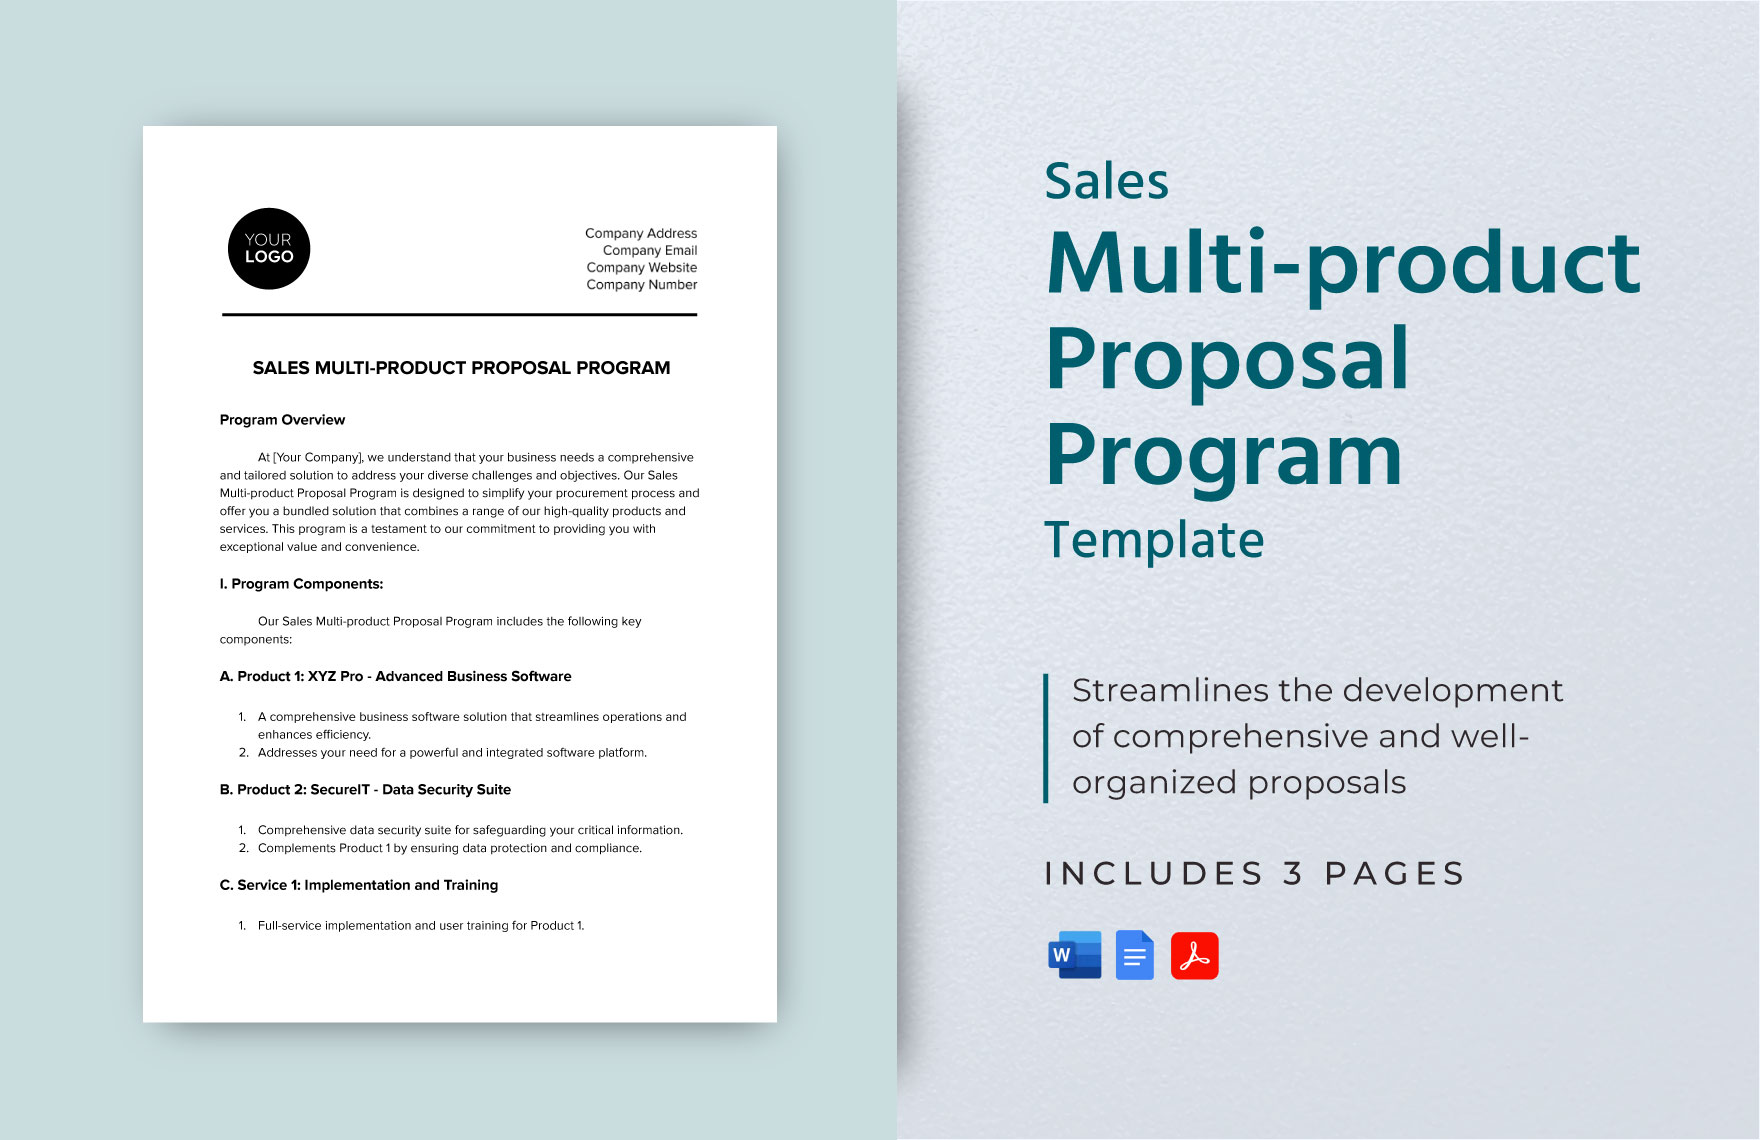 Sales Multi-product Proposal Program Template in Word, Google Docs, PDF